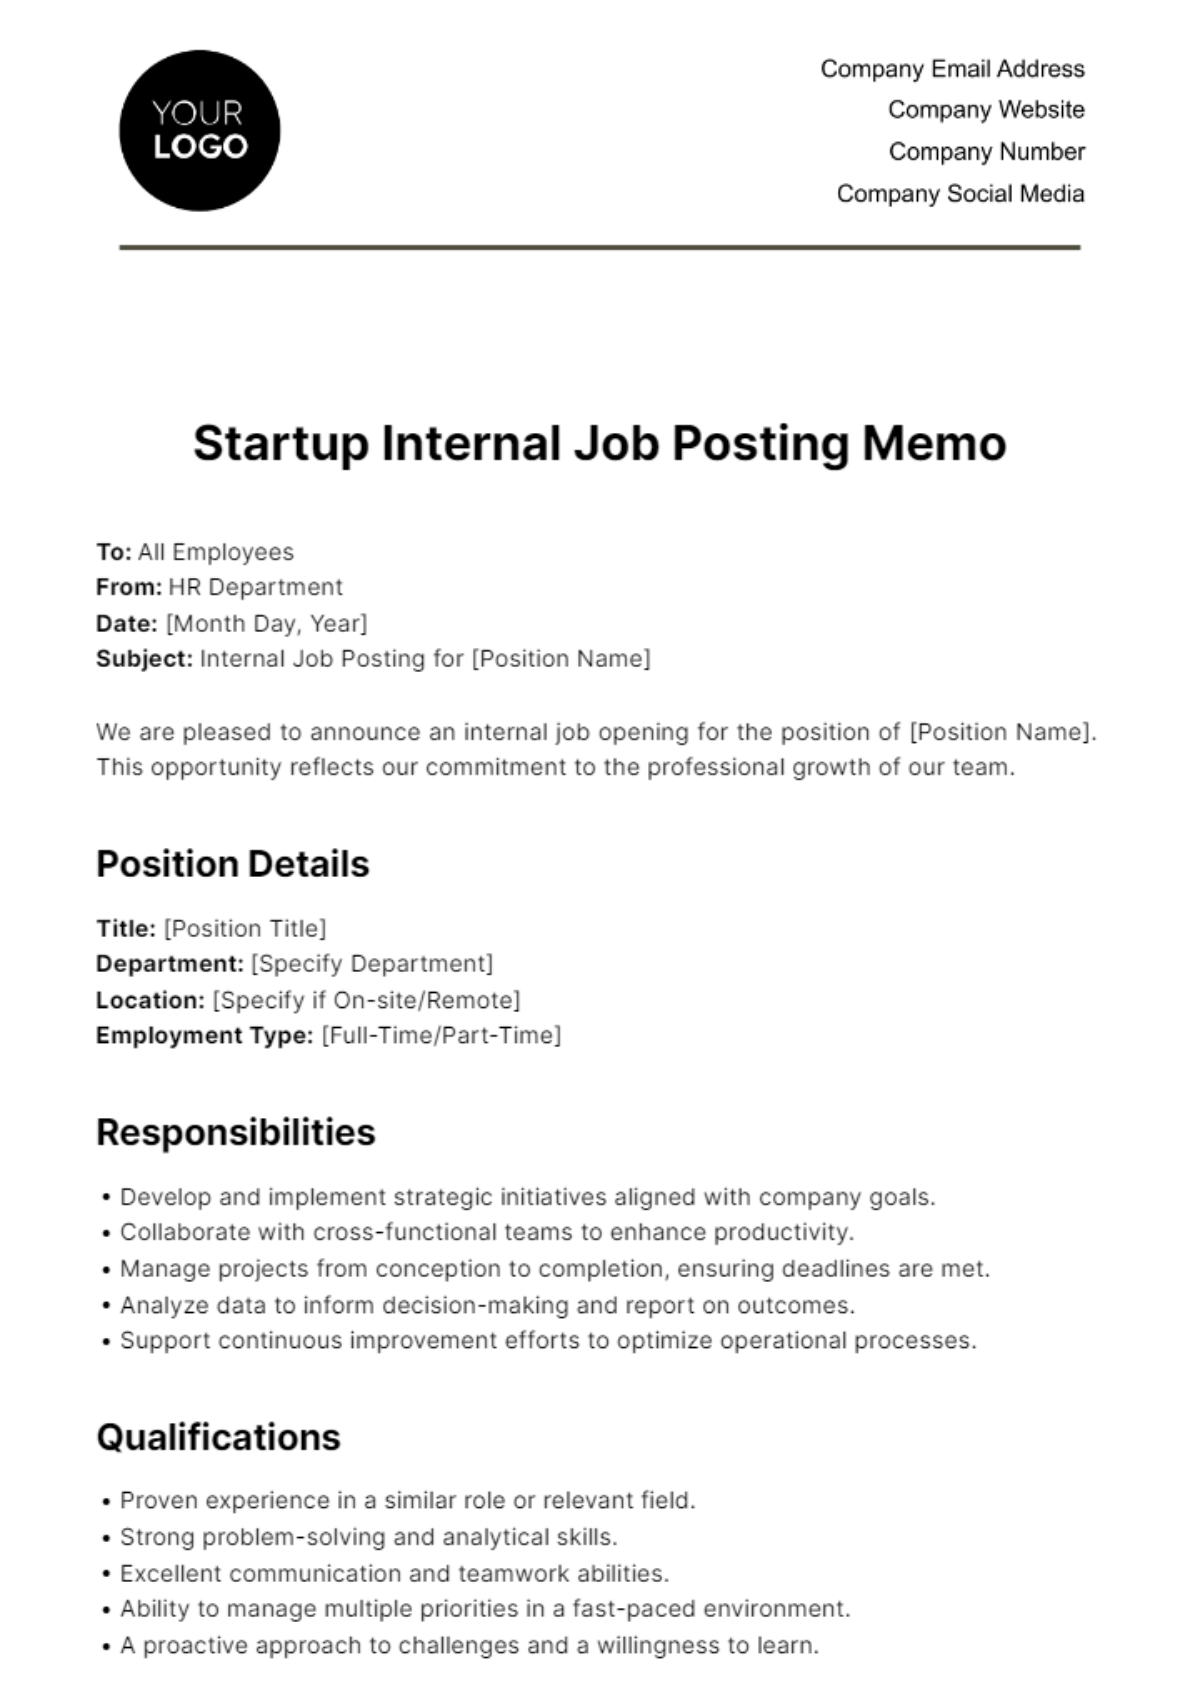 Free Startup Internal Job Posting Memo Template